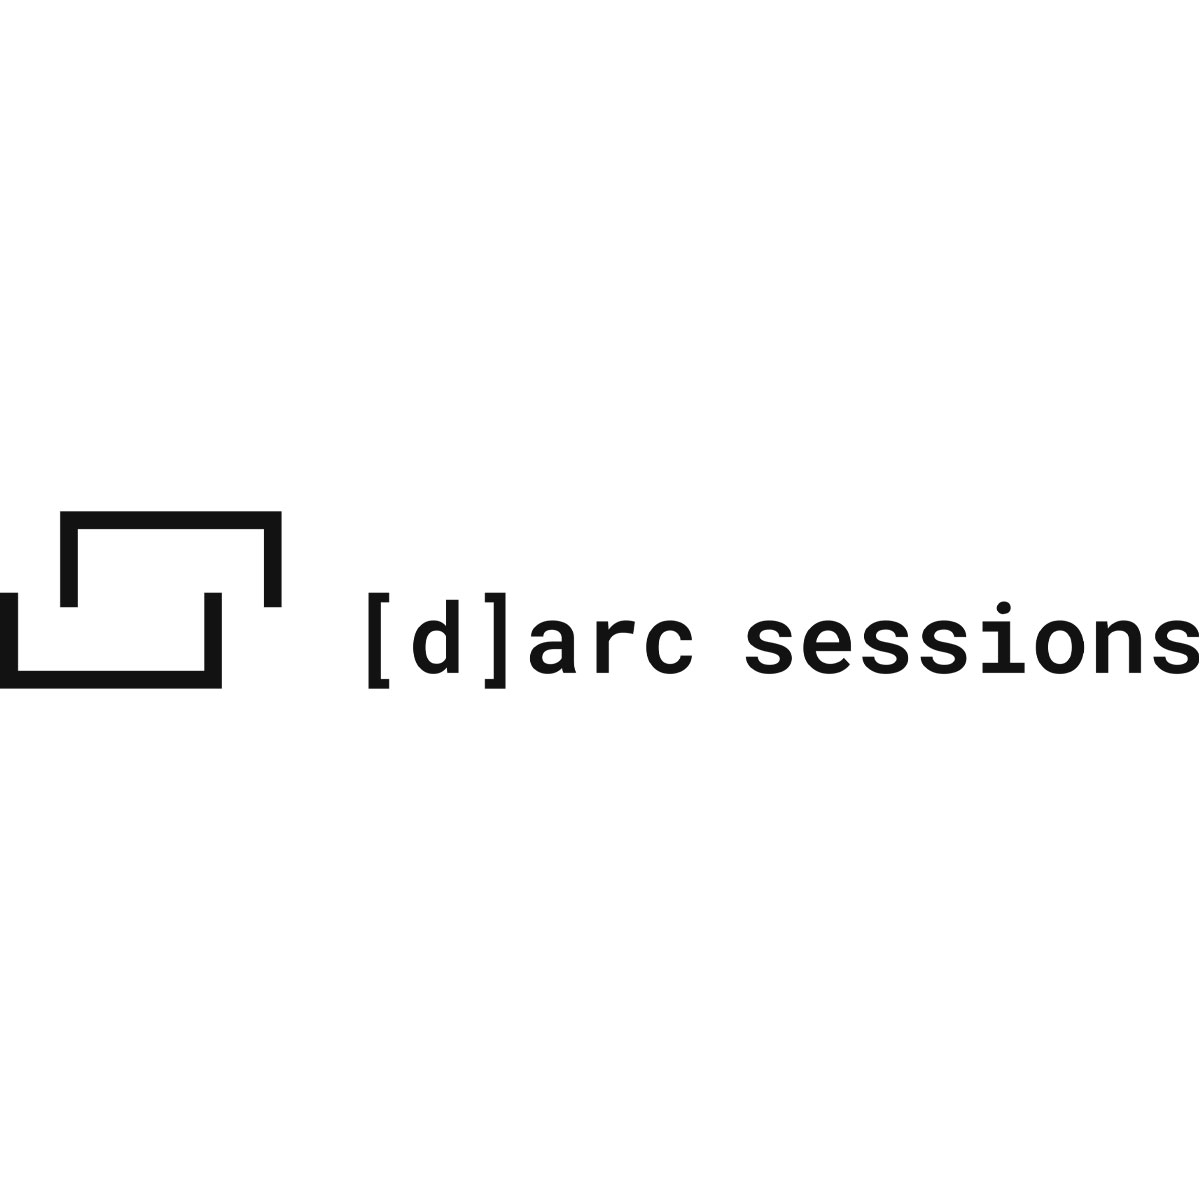 darc sessions